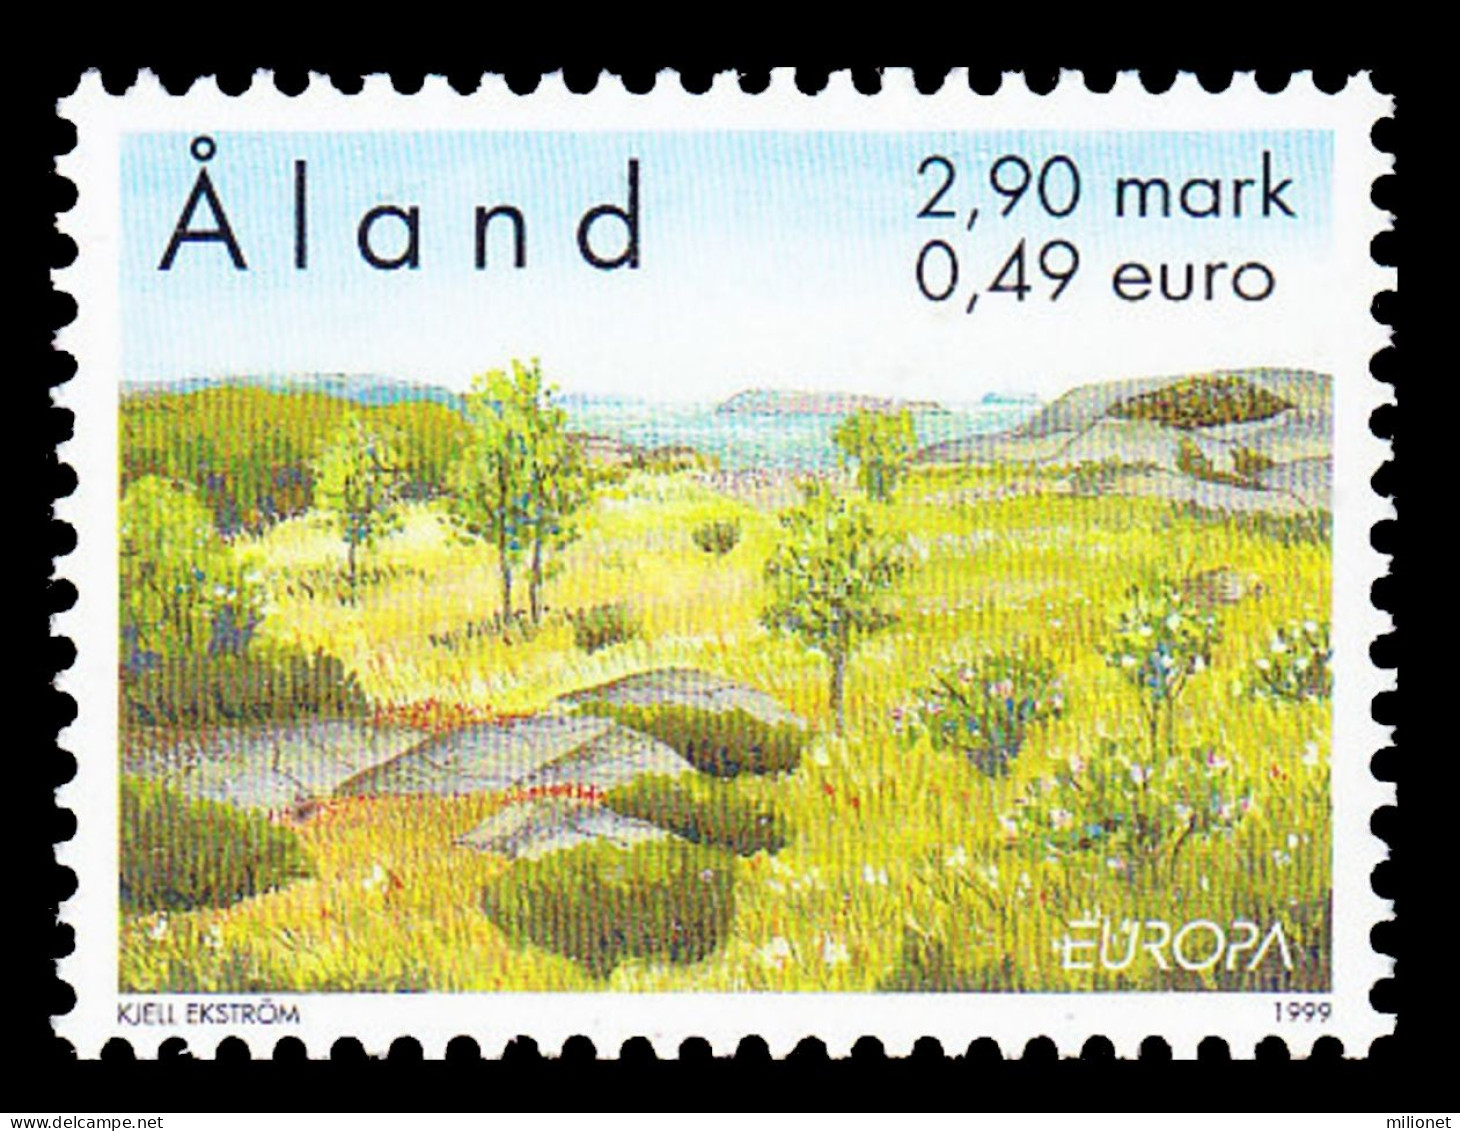 SALE!!! ALAND 1999 EUROPA National Reserves & Parks Stamp MNH ** - 1999